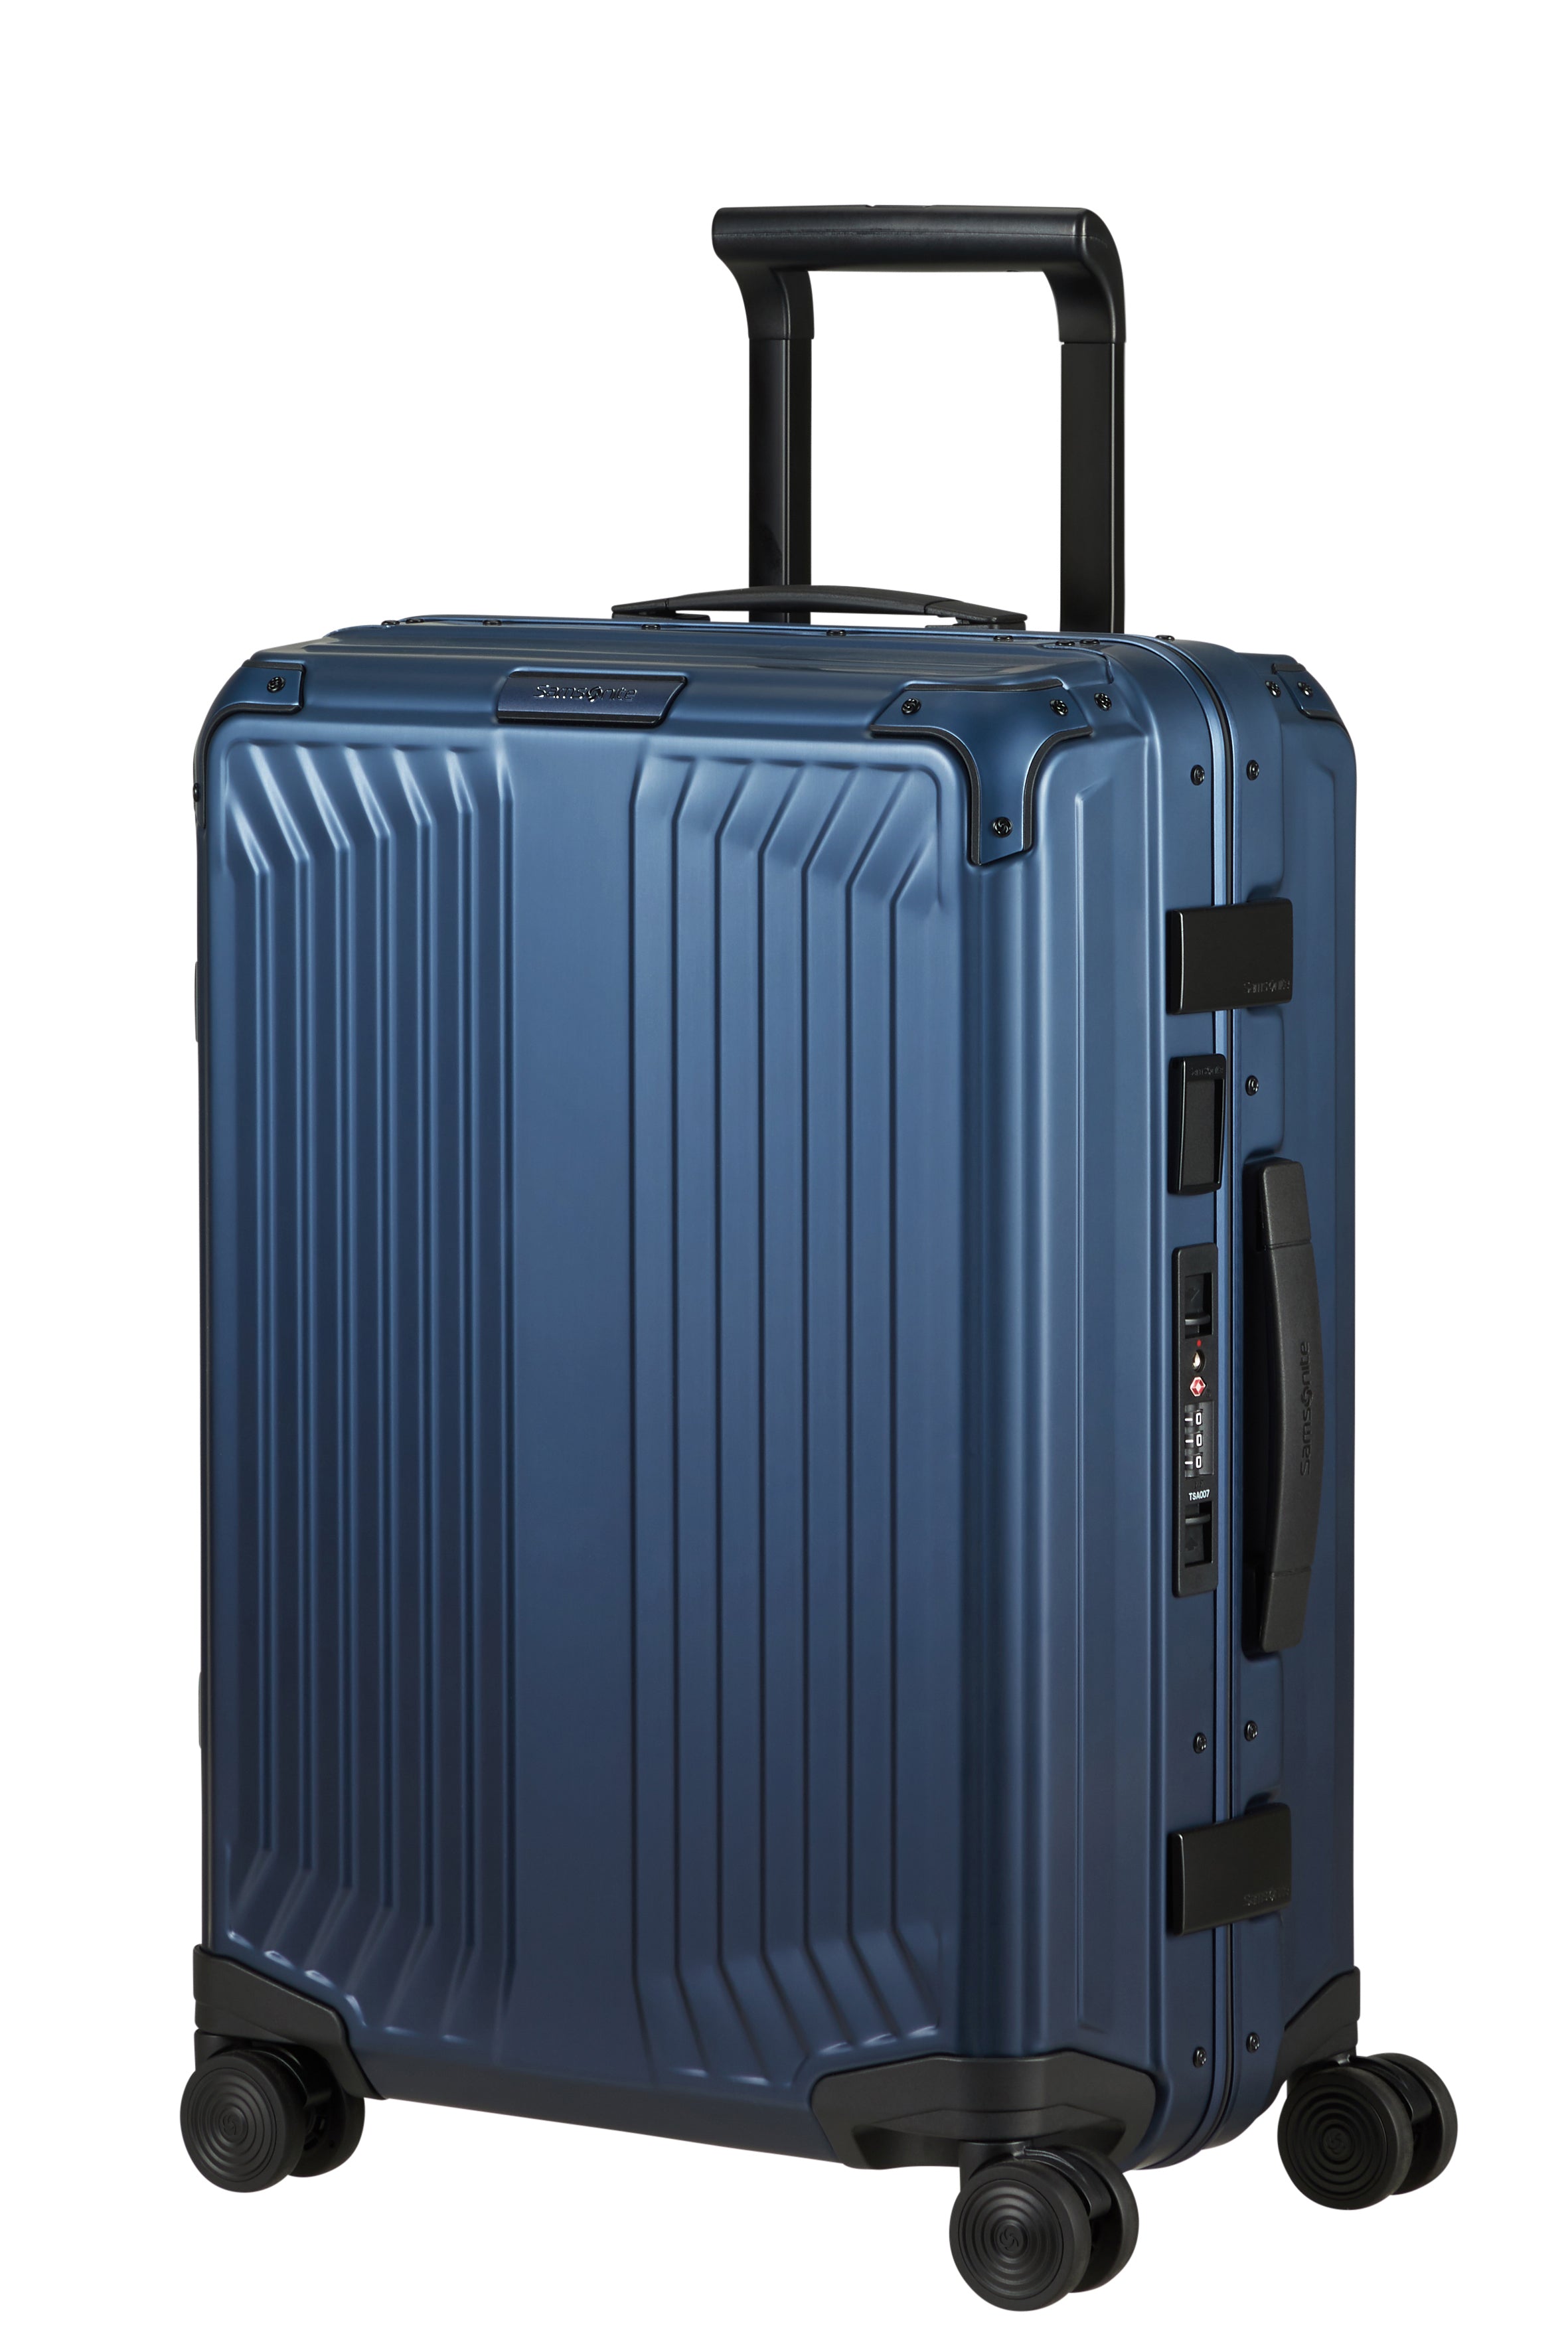 Samsonite - Lite Box ALU 55cm Small 4 Wheel Hard Suitcase - Gradient Midnight